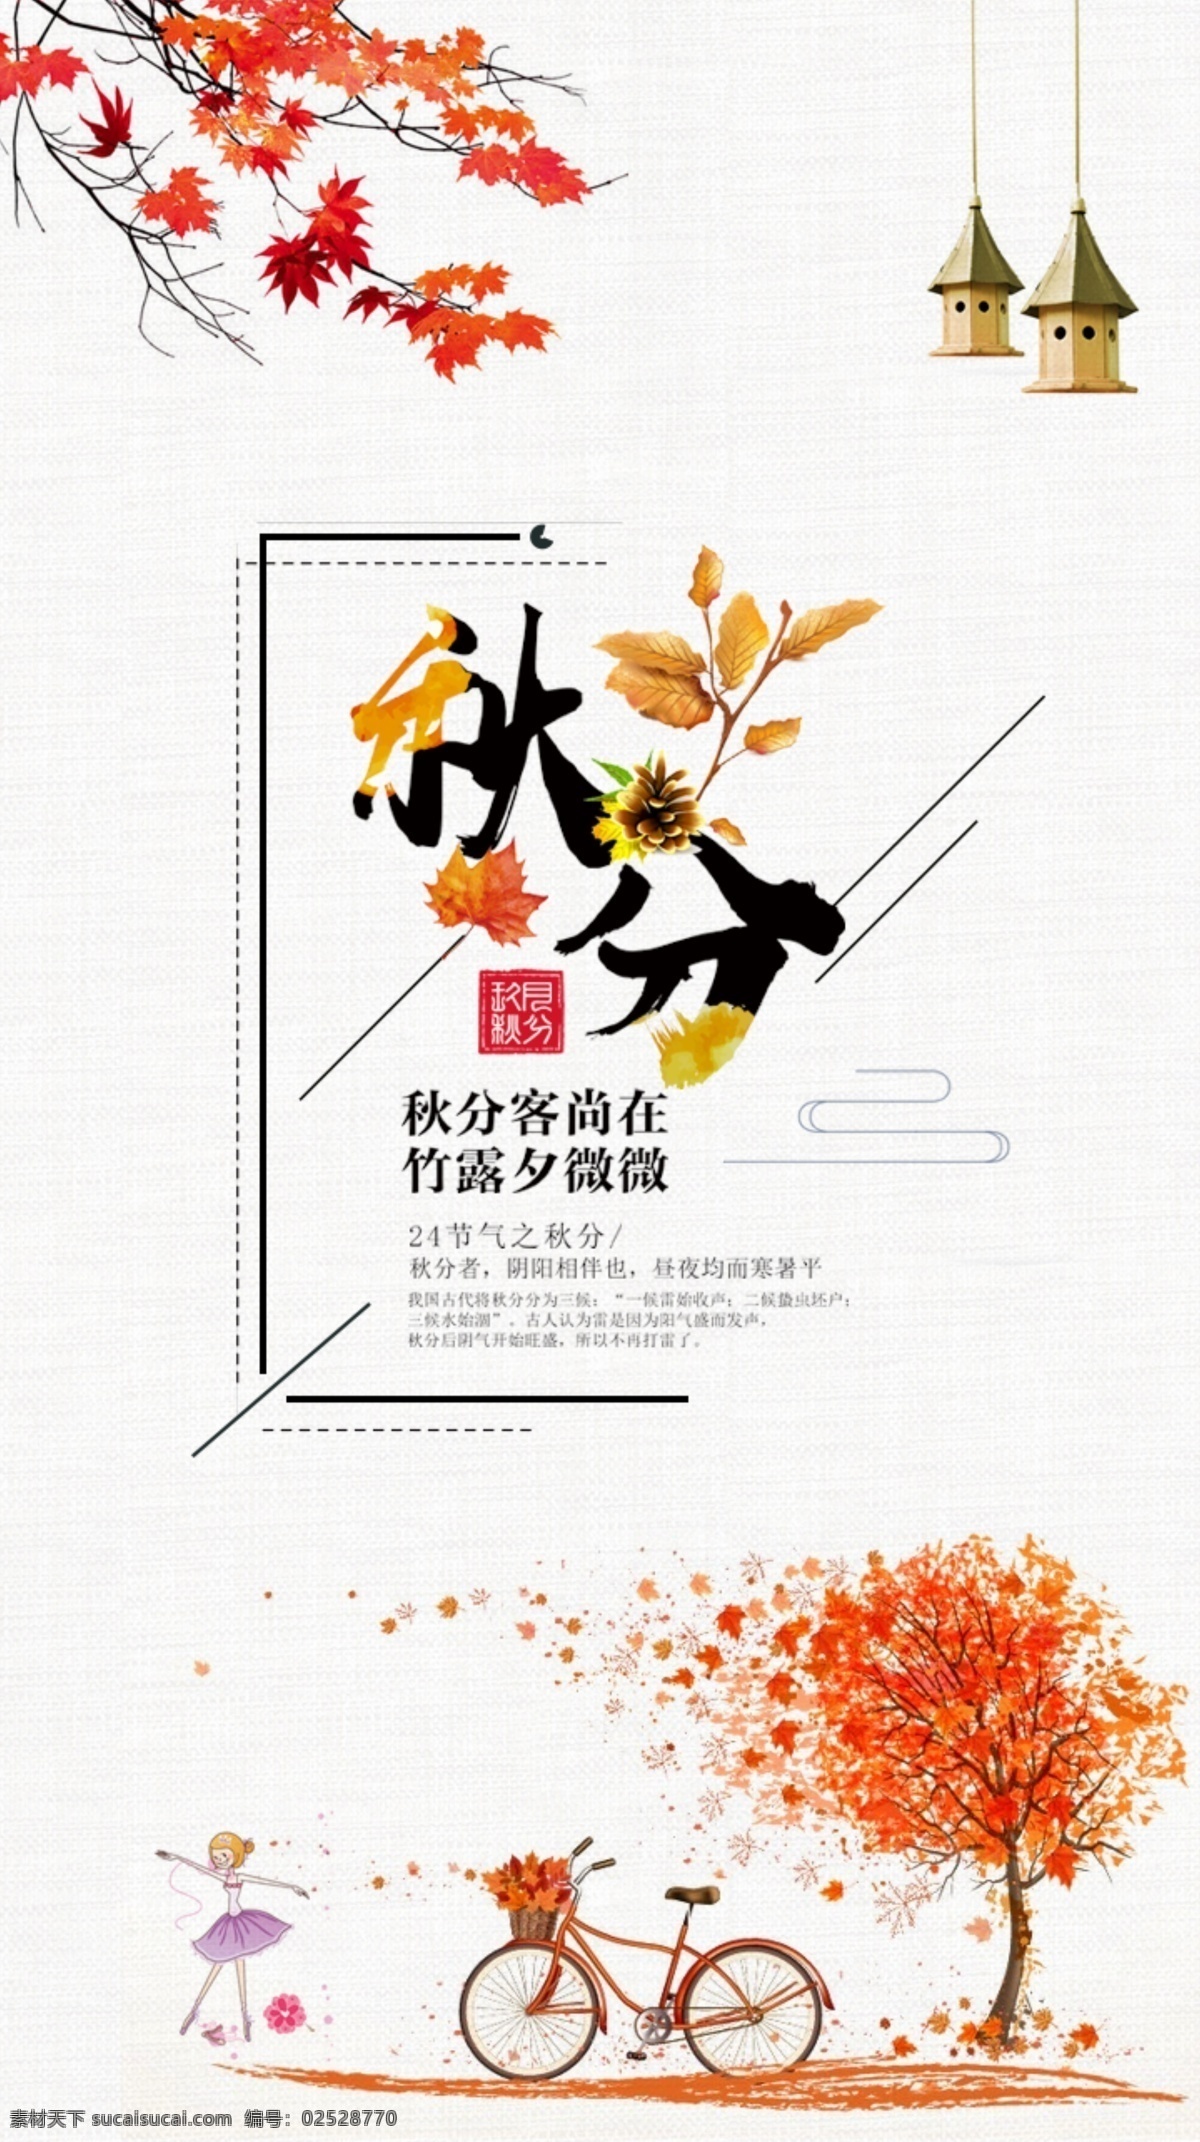 qiufen 24节气 秋分 节日海报 手机宣传图 微 信 账号 宣传 图